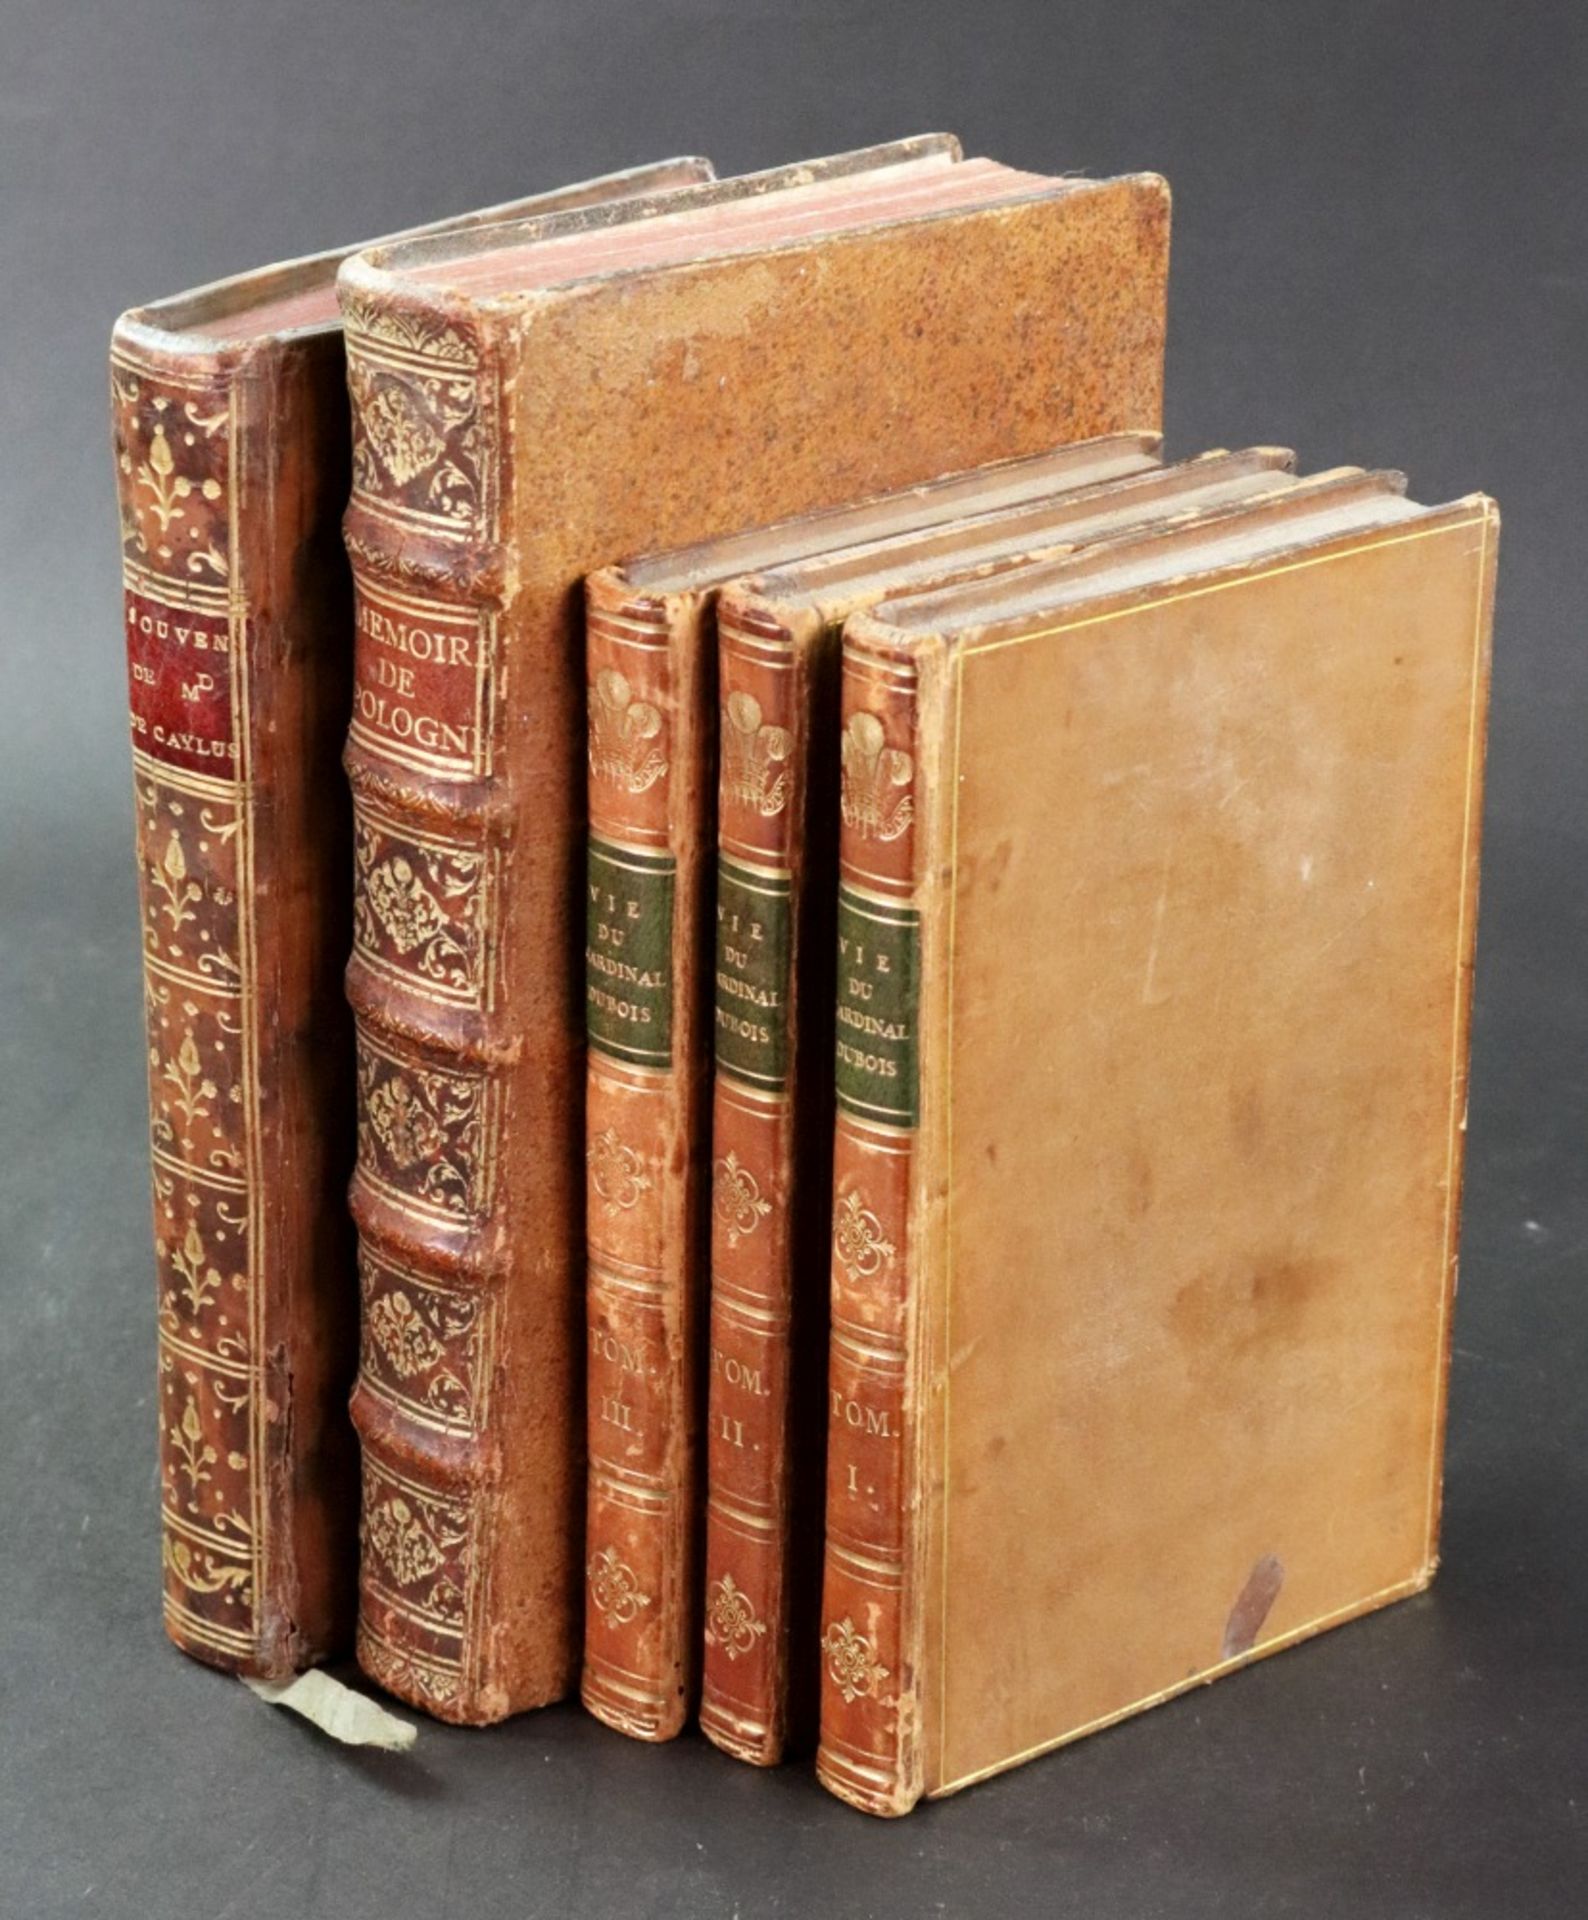 Continental bindings comprising; Vie Privee du Cardinal Dubois ...2nd. edition, revue (etc).